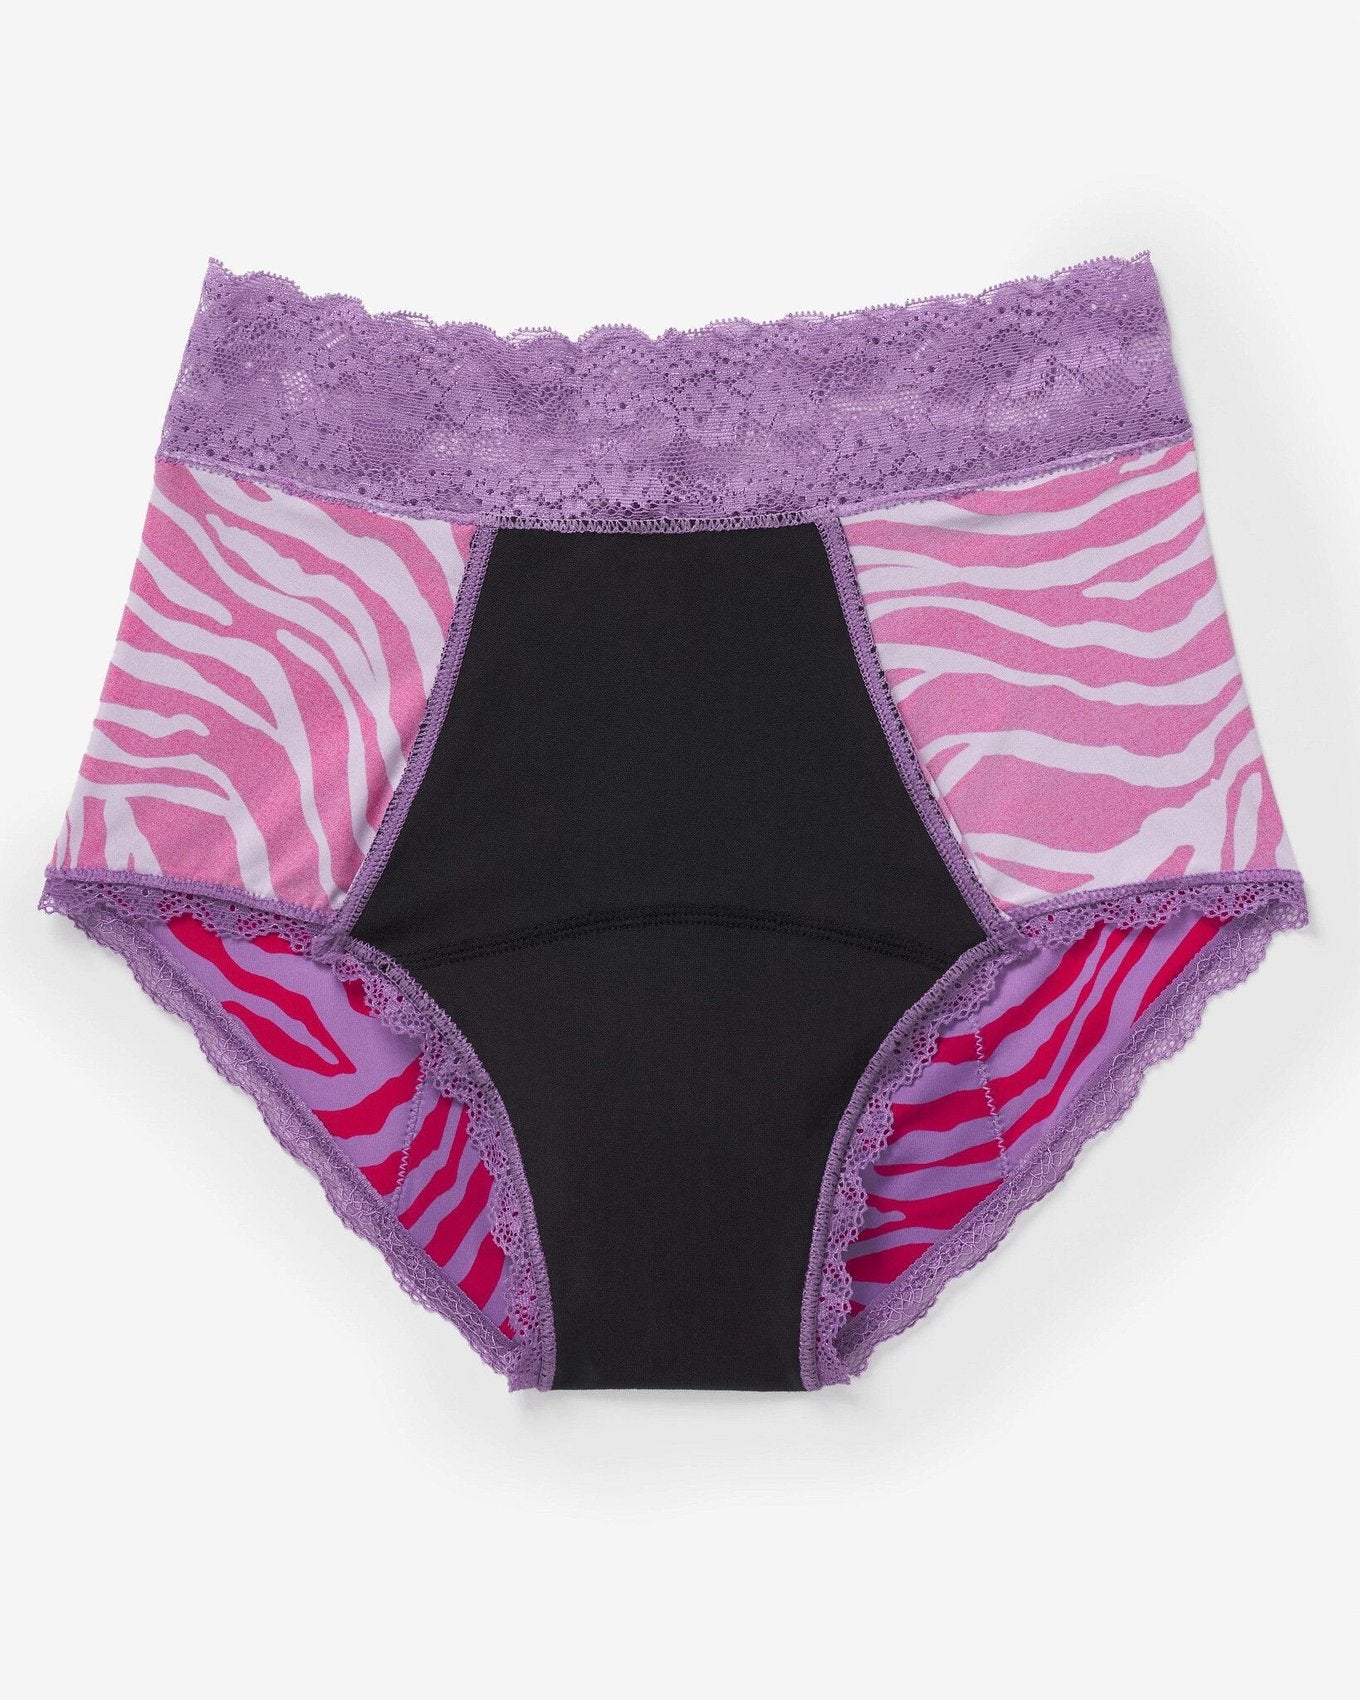 Joyja Amelia period-proof panty in color Secret Safari C02 and shape high waisted